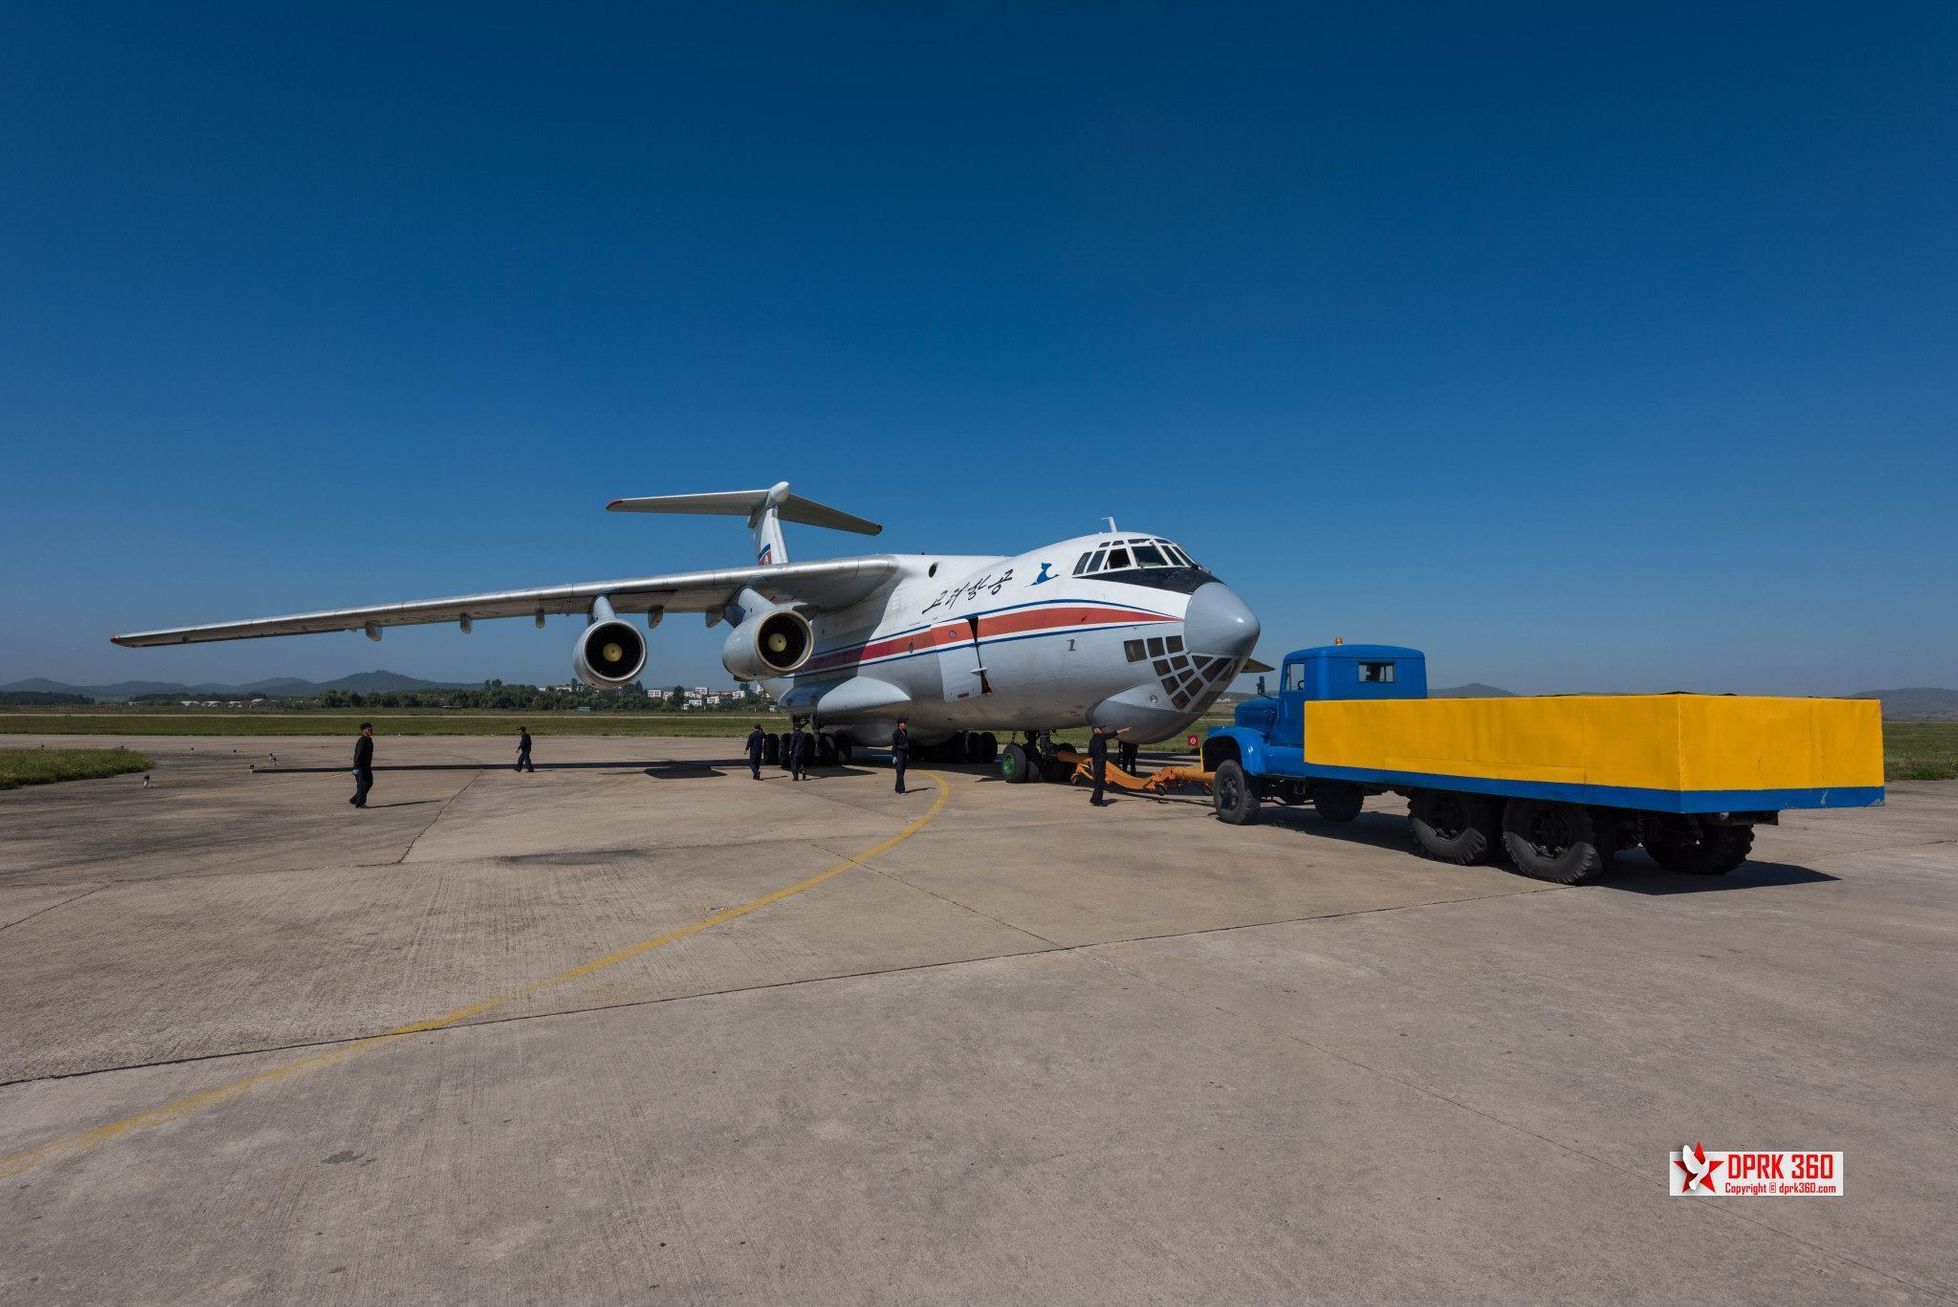 Iljušin Il-76